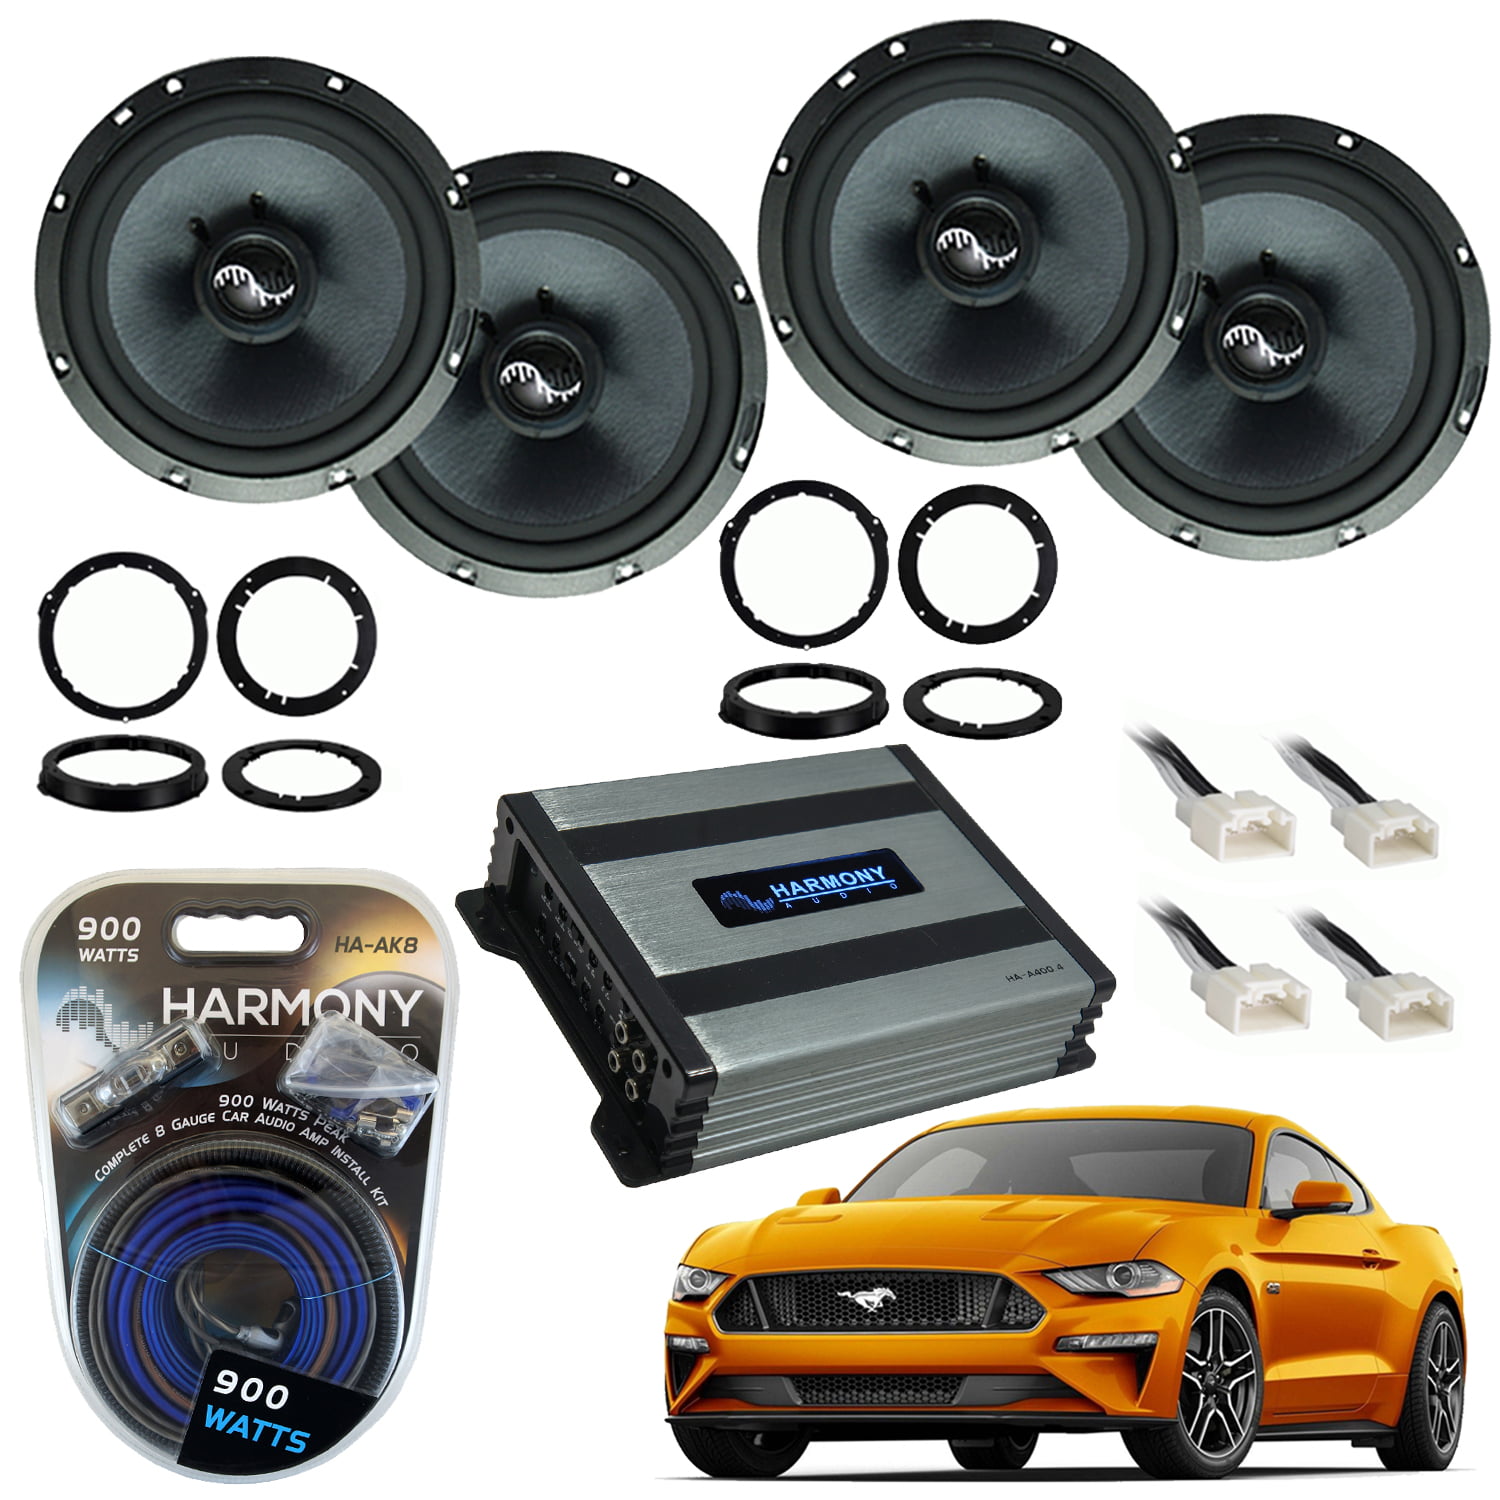 Compatible with Dodge Caravan 2008-2019 Factory Speaker Replacement Package Harmony Audio Bundle R69 & CXA360.4 